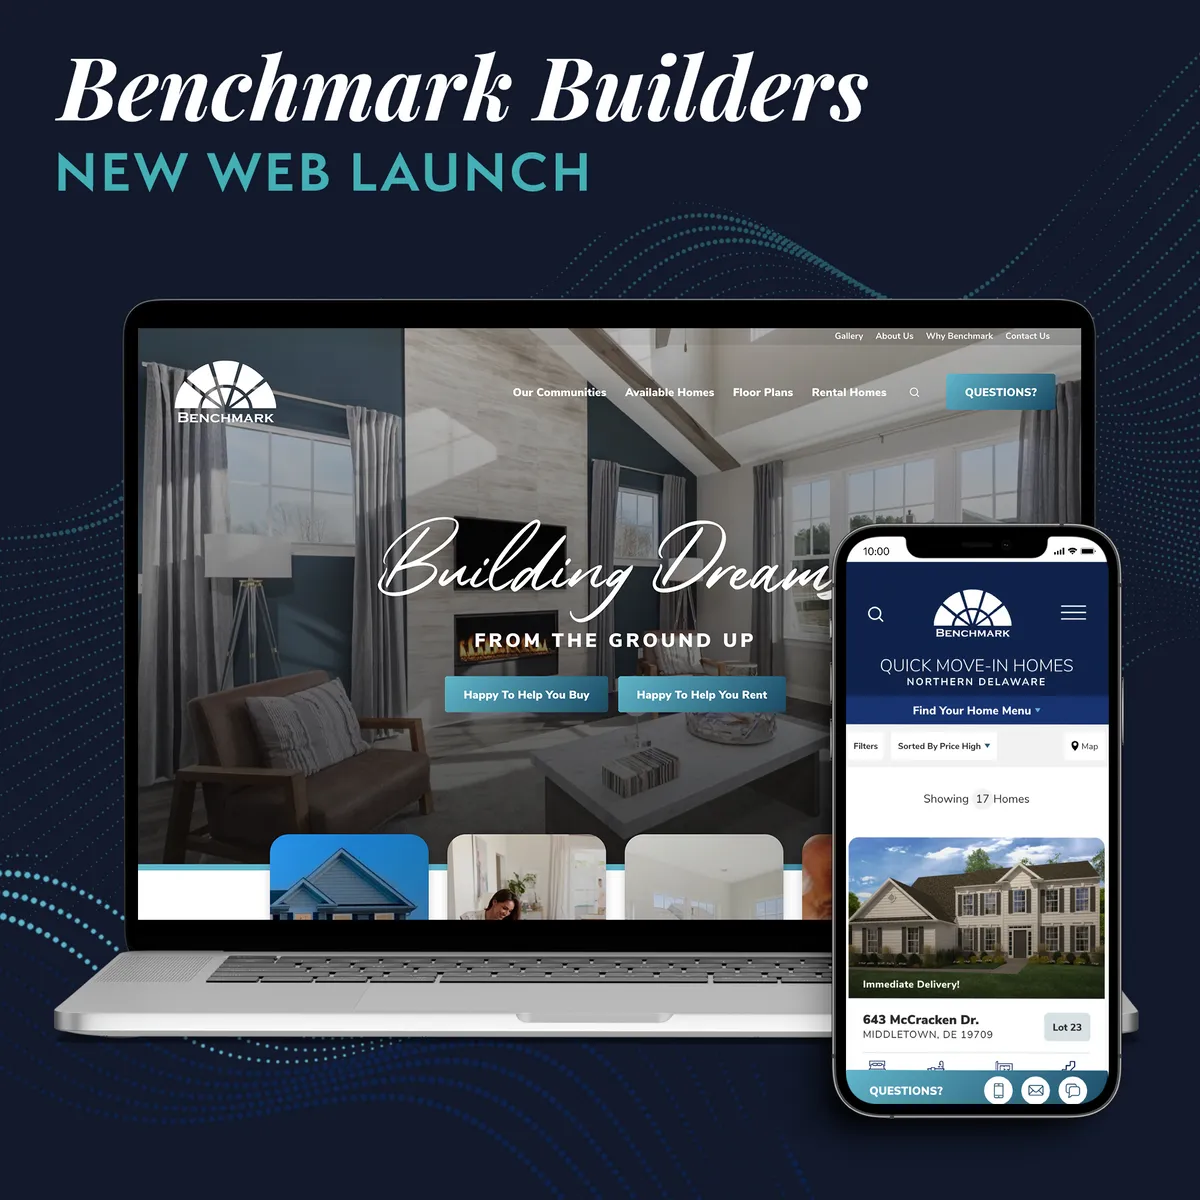 New Web Launch: Benchmark Builders